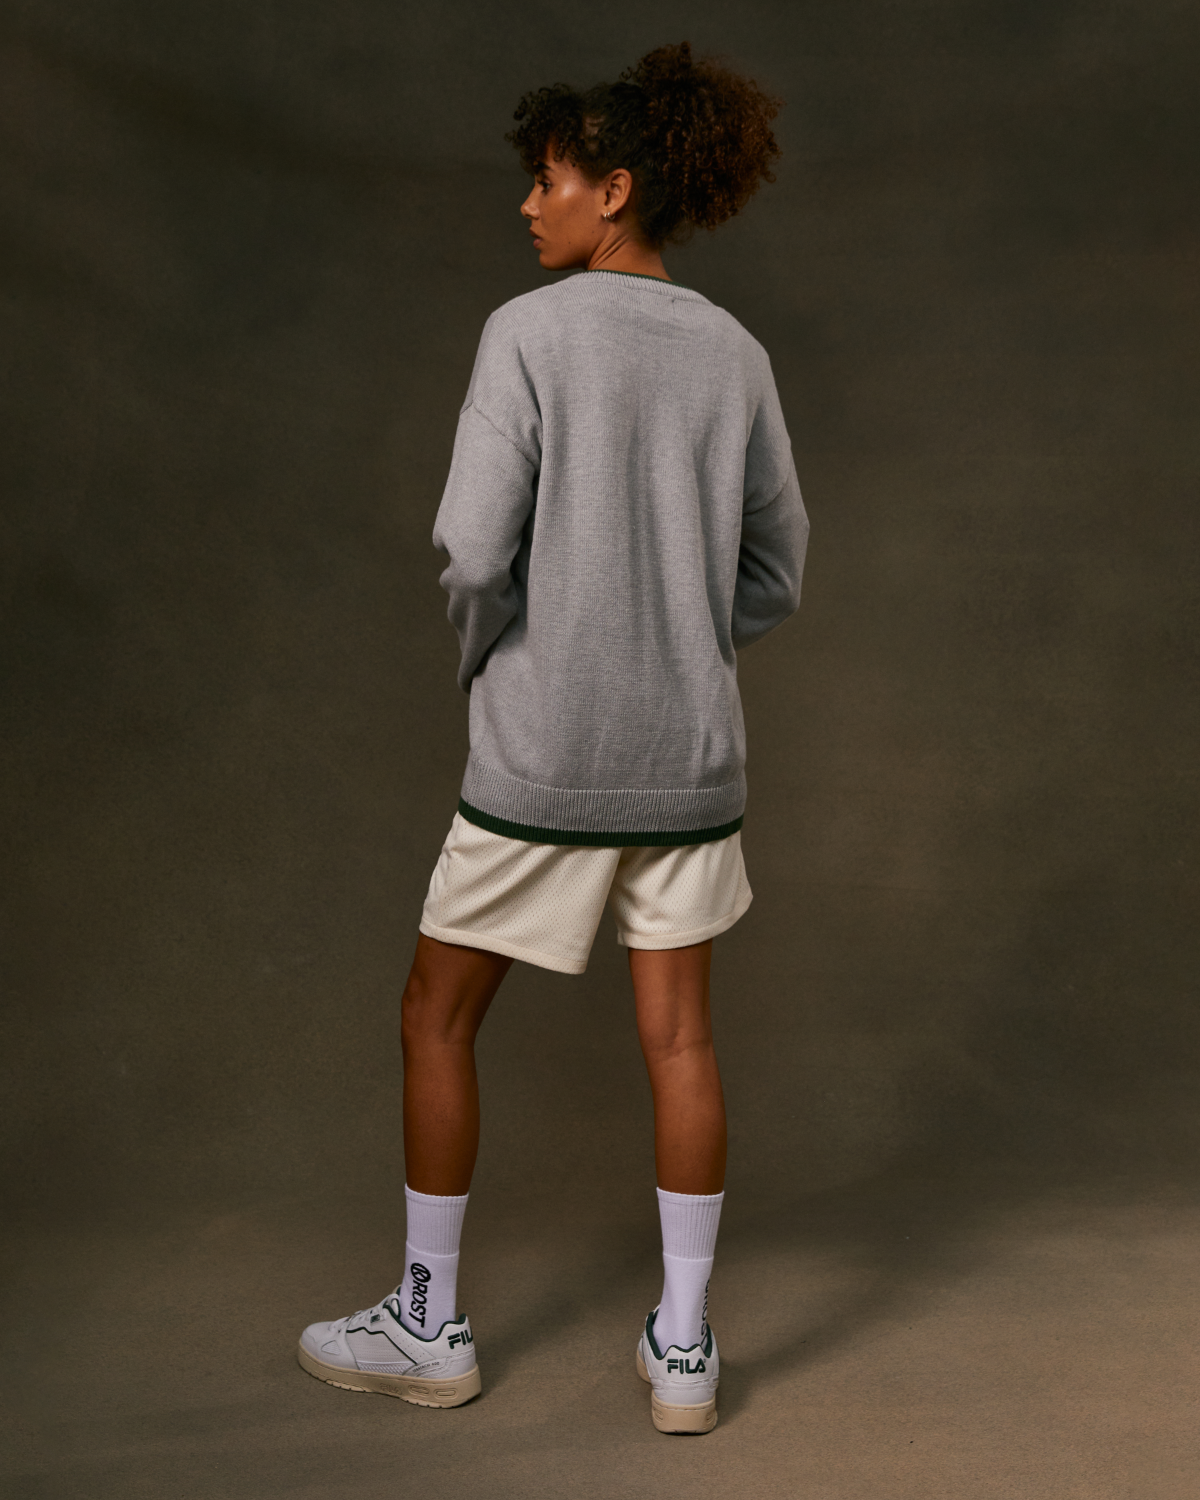 Unisex grey long sleeve Kosher K v-neck 100% cotton sweater unique streetwear fashion by Krost NY